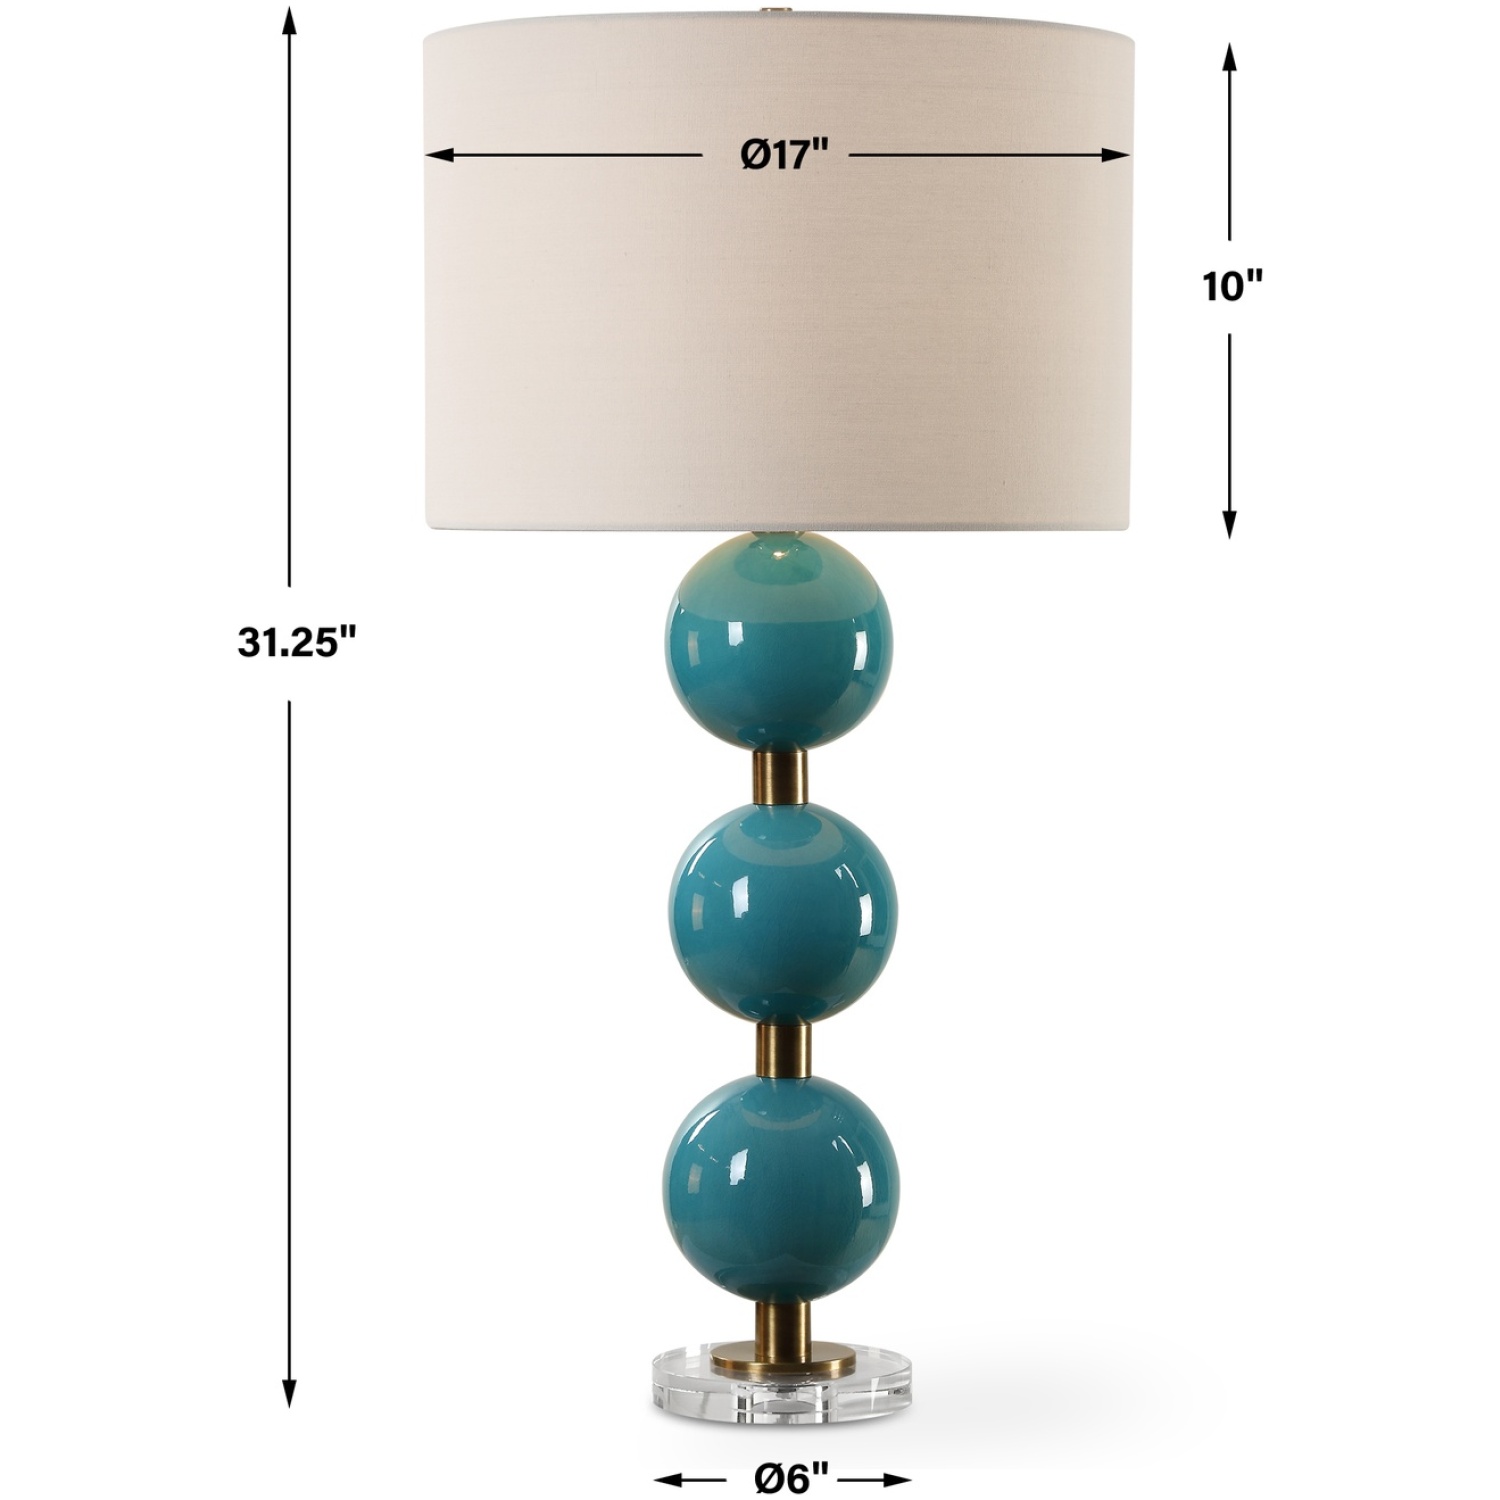 Palawan Blue Glaze Table Lamp